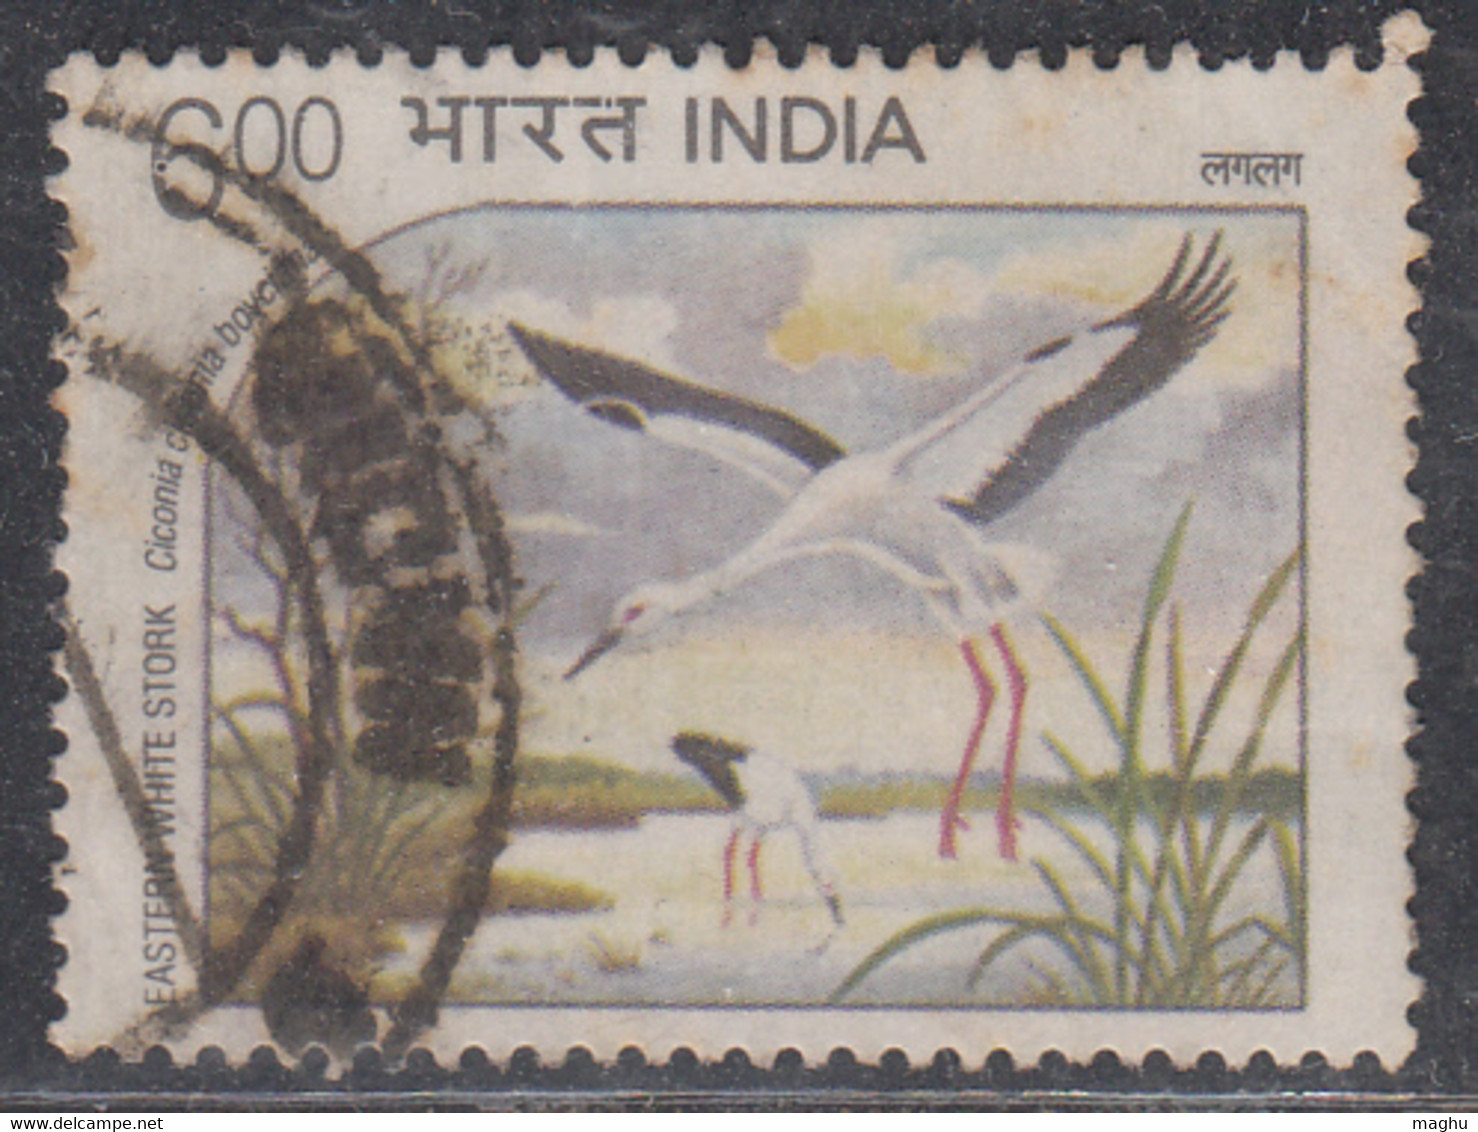 India Used 1994 Water Birds, Bird, - Oblitérés